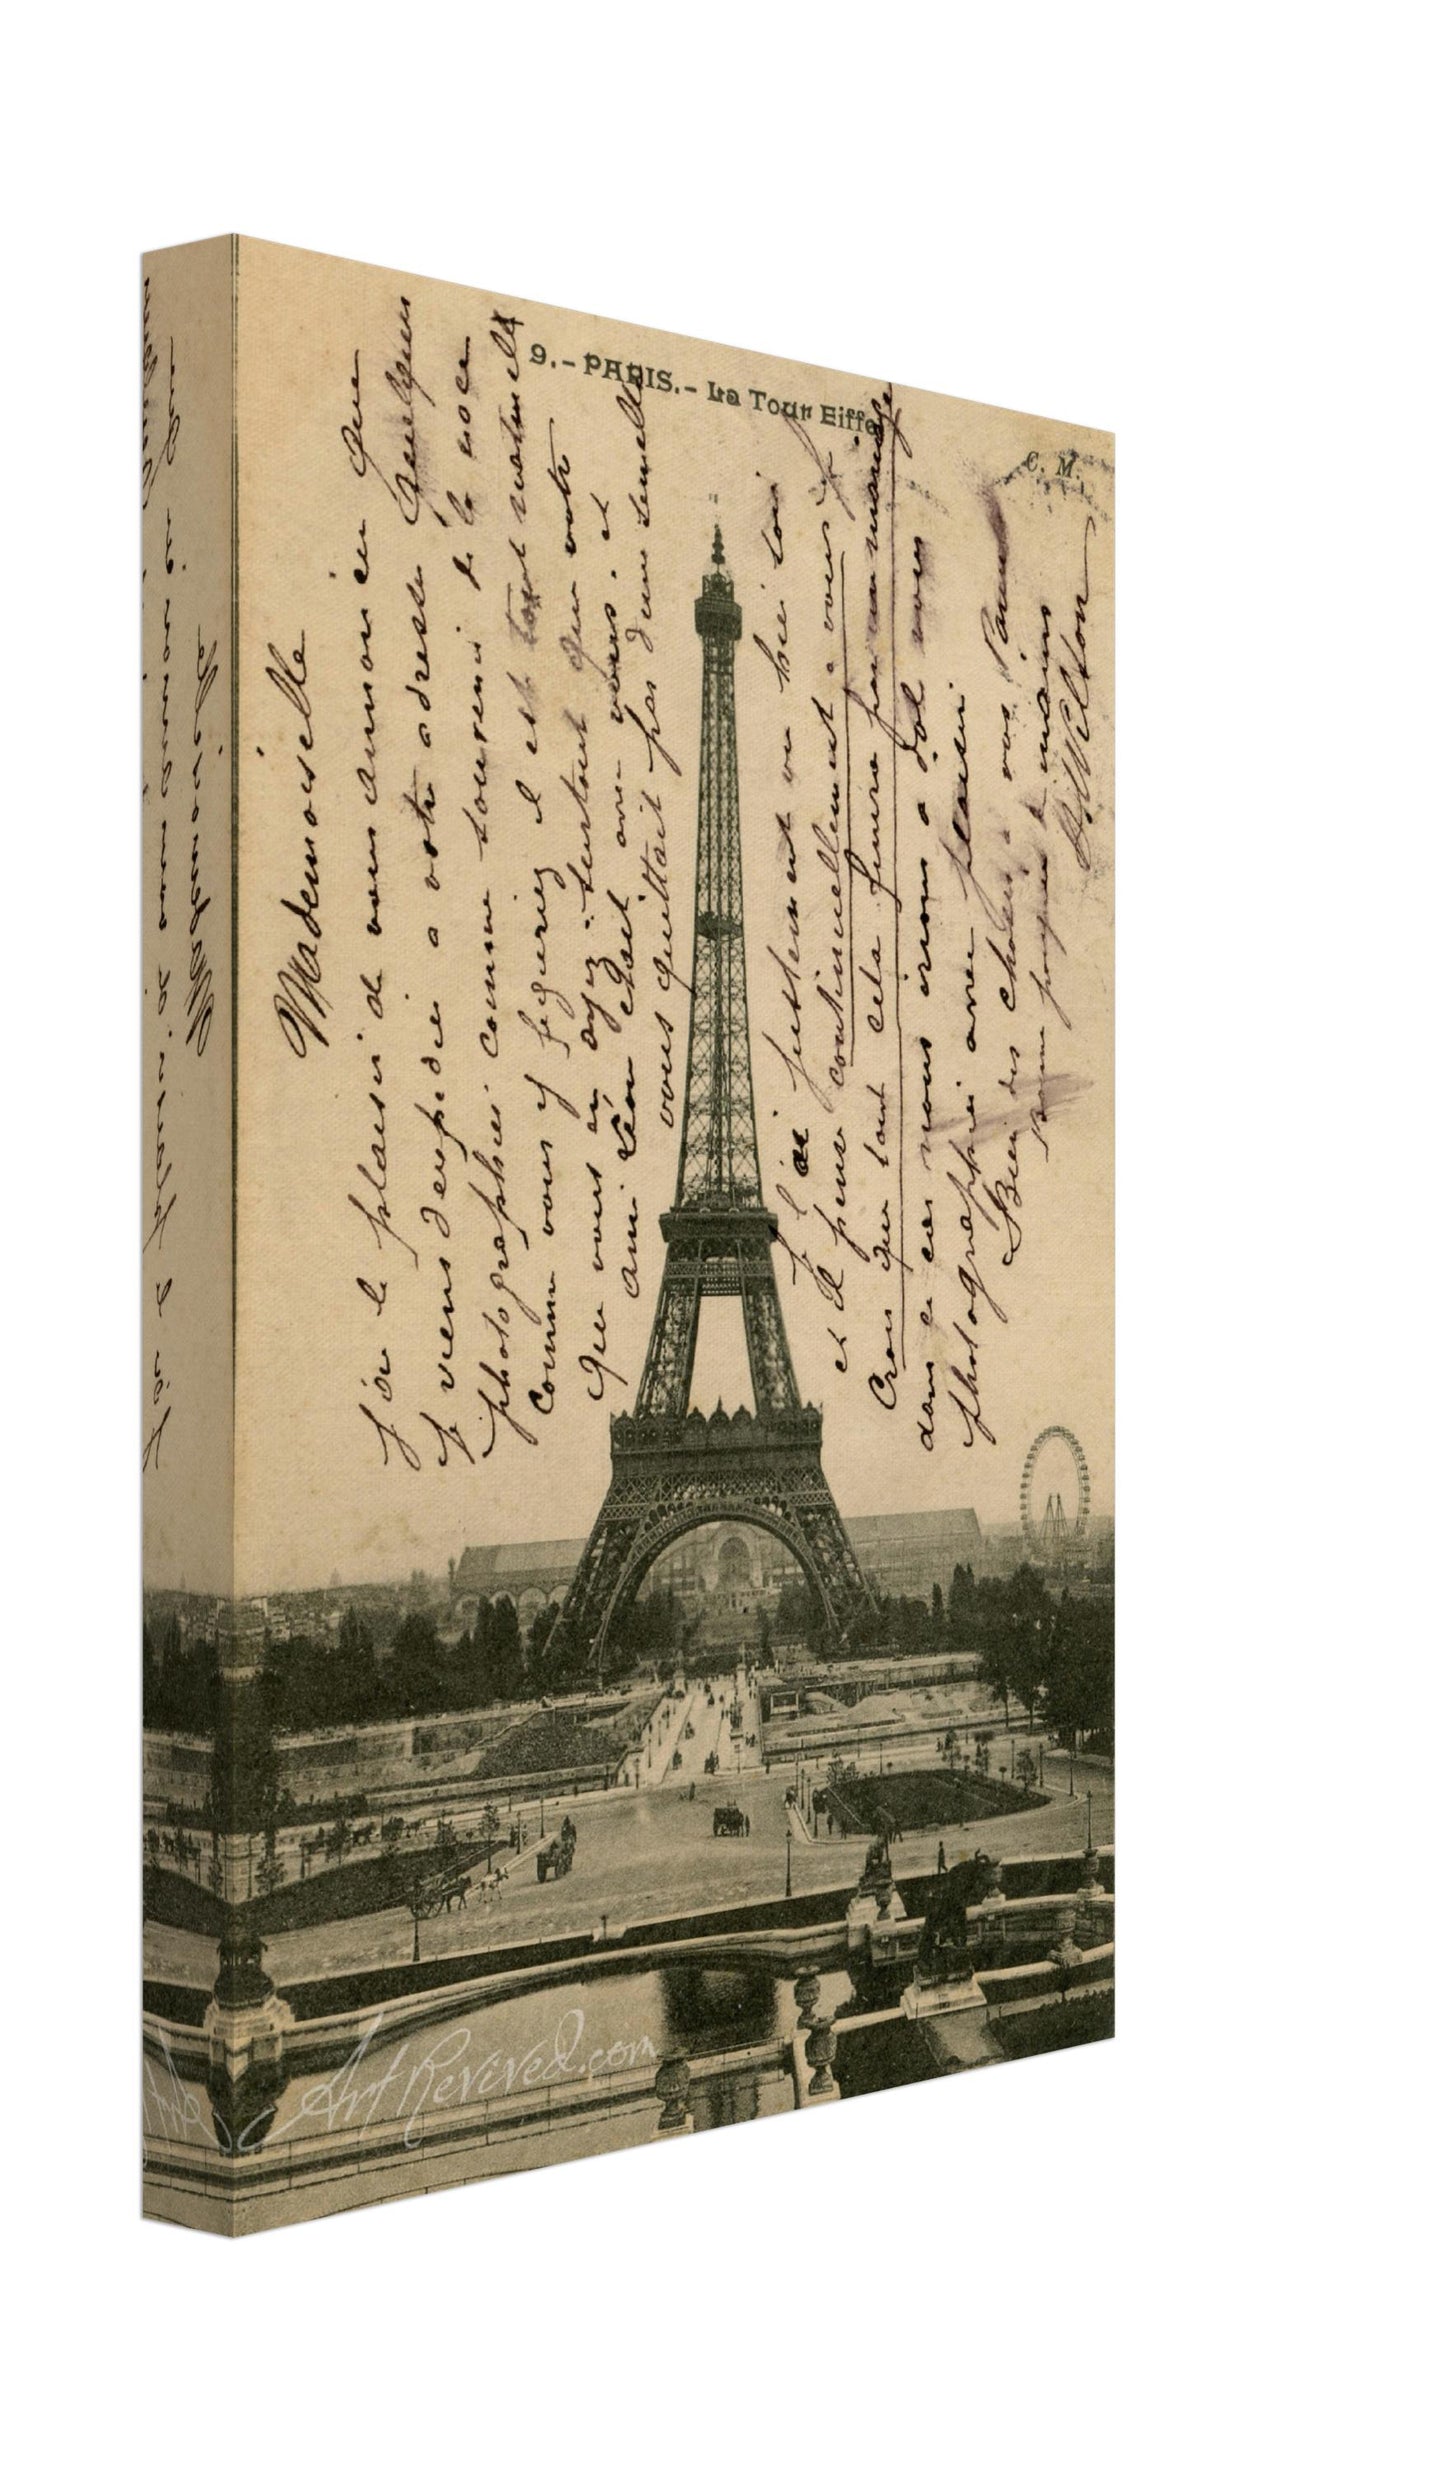 The Eiffel Tower Roue in background (ferris-wheel)